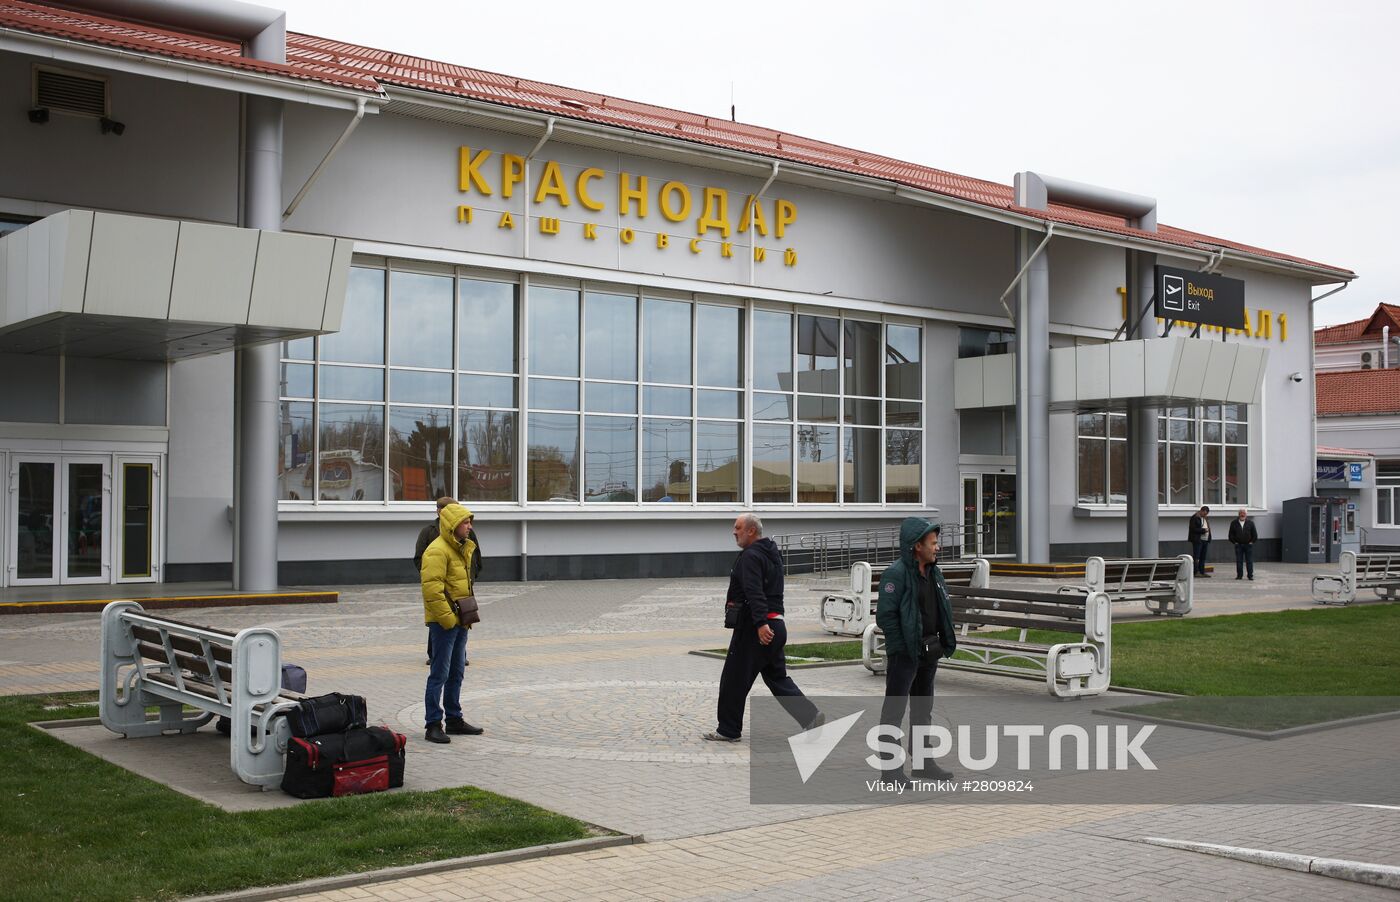 Krasnodar international airport (Pashkovsky)